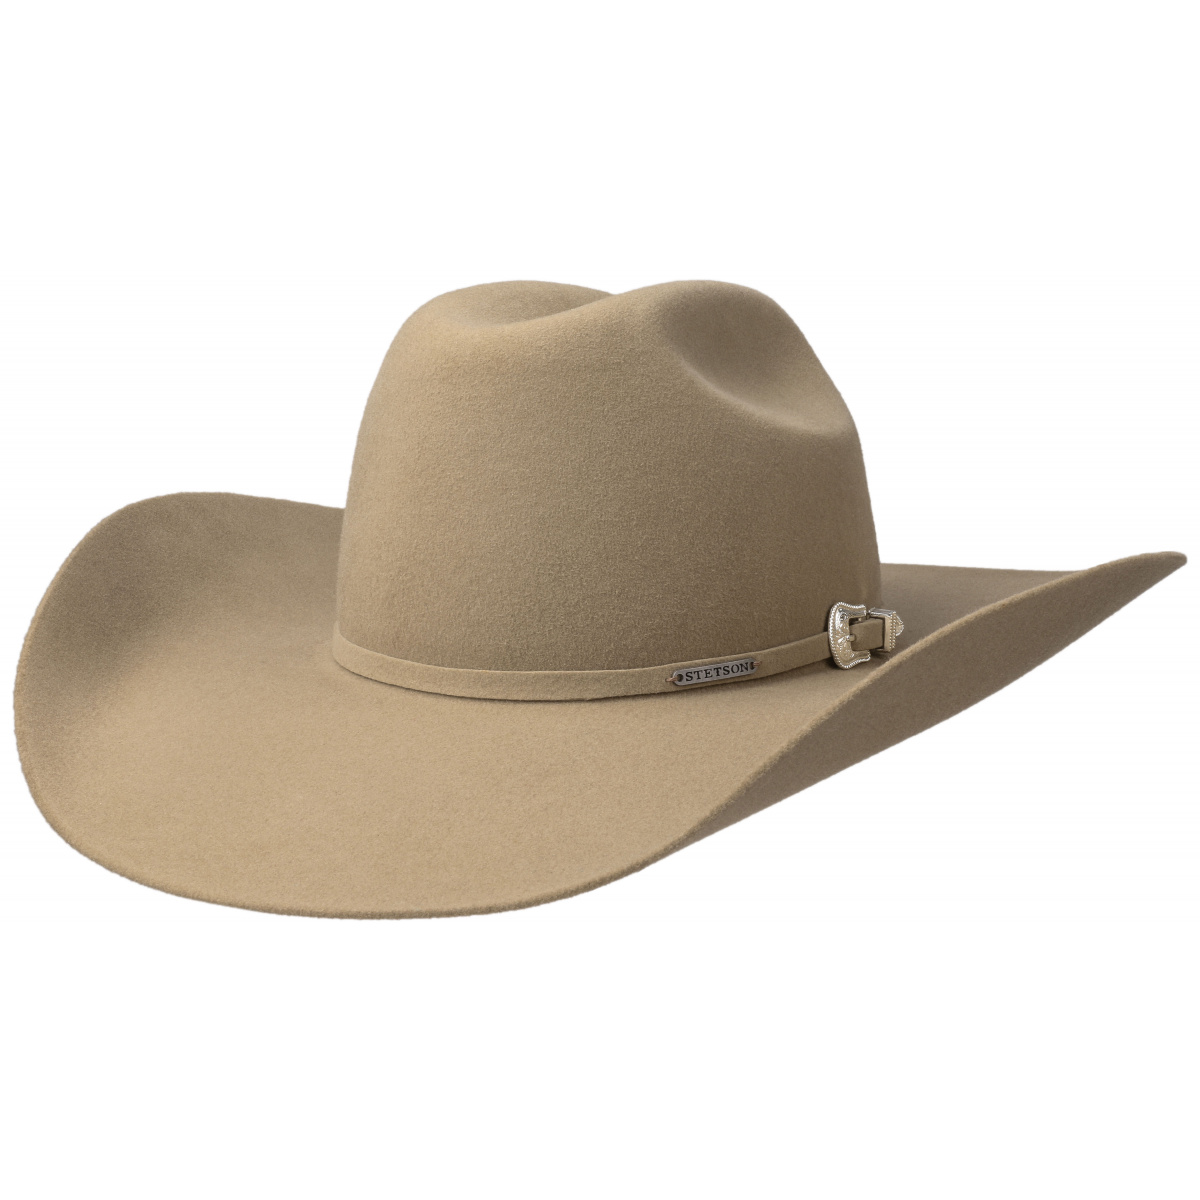 Chapeau beige Cowboy Cattleman revolver noir - Stetson Reference : 8169